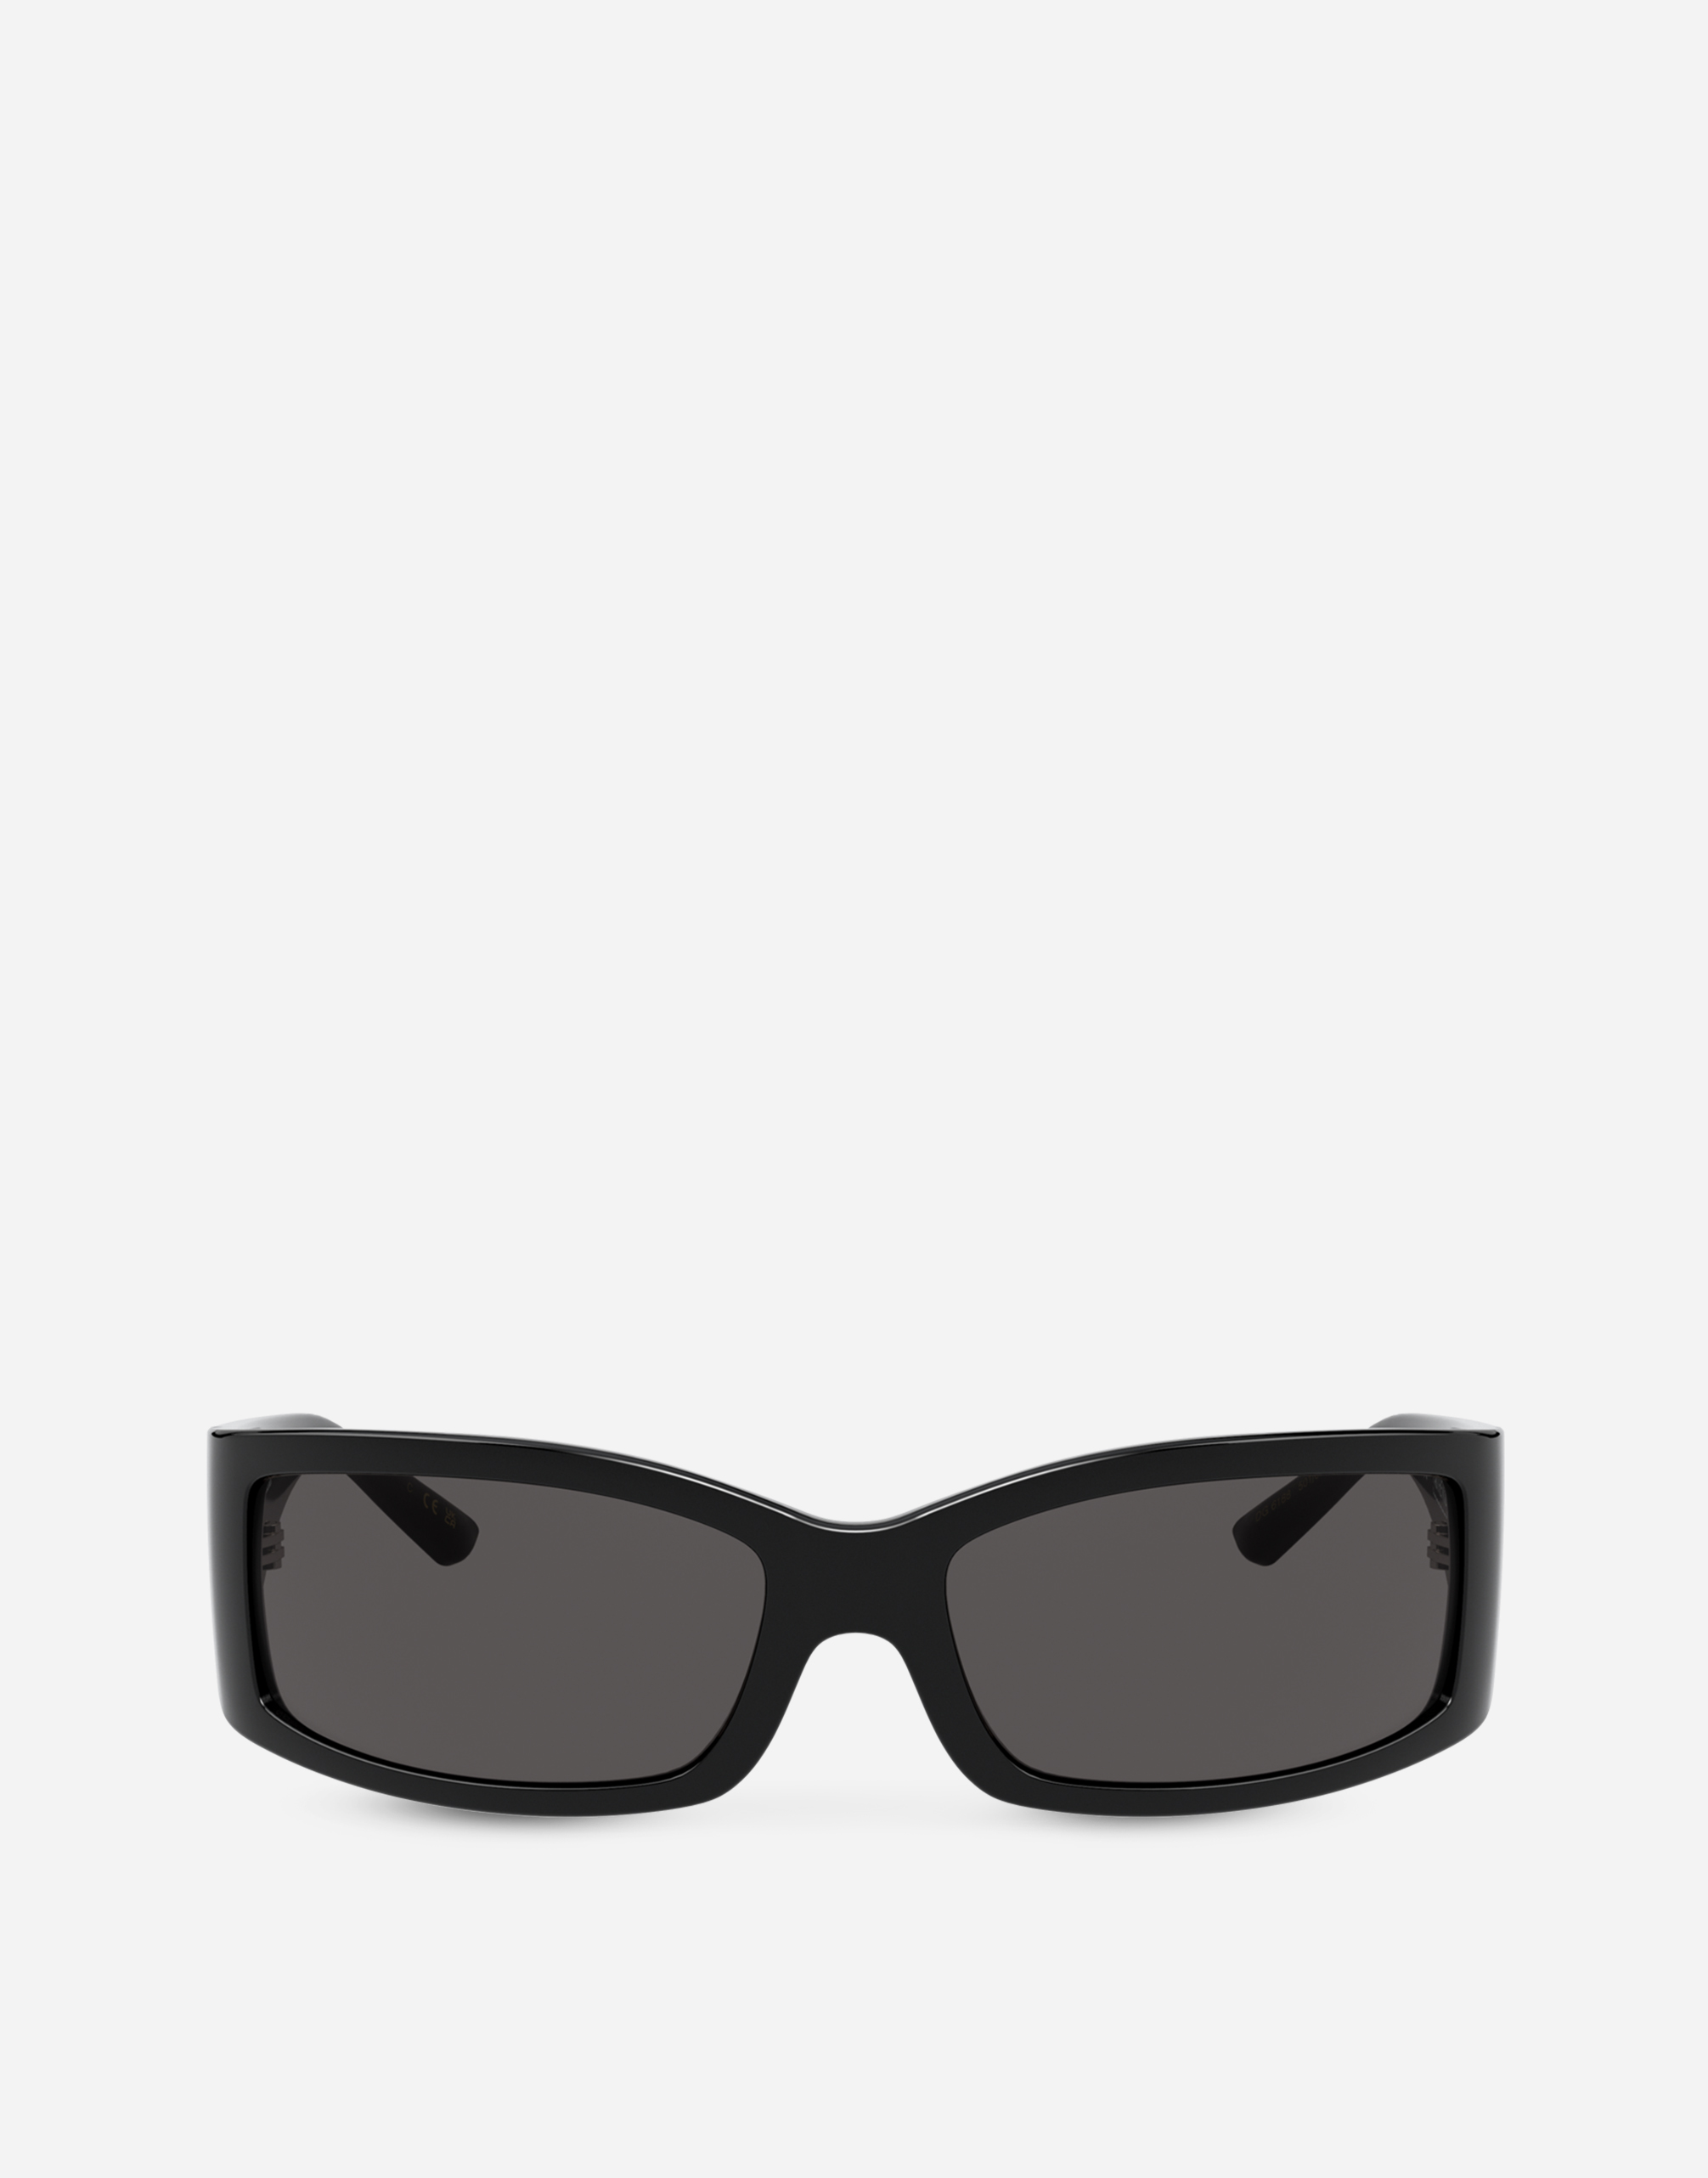 Re- Edition | Sunglasses in Black for for Men | Dolce&Gabbana®